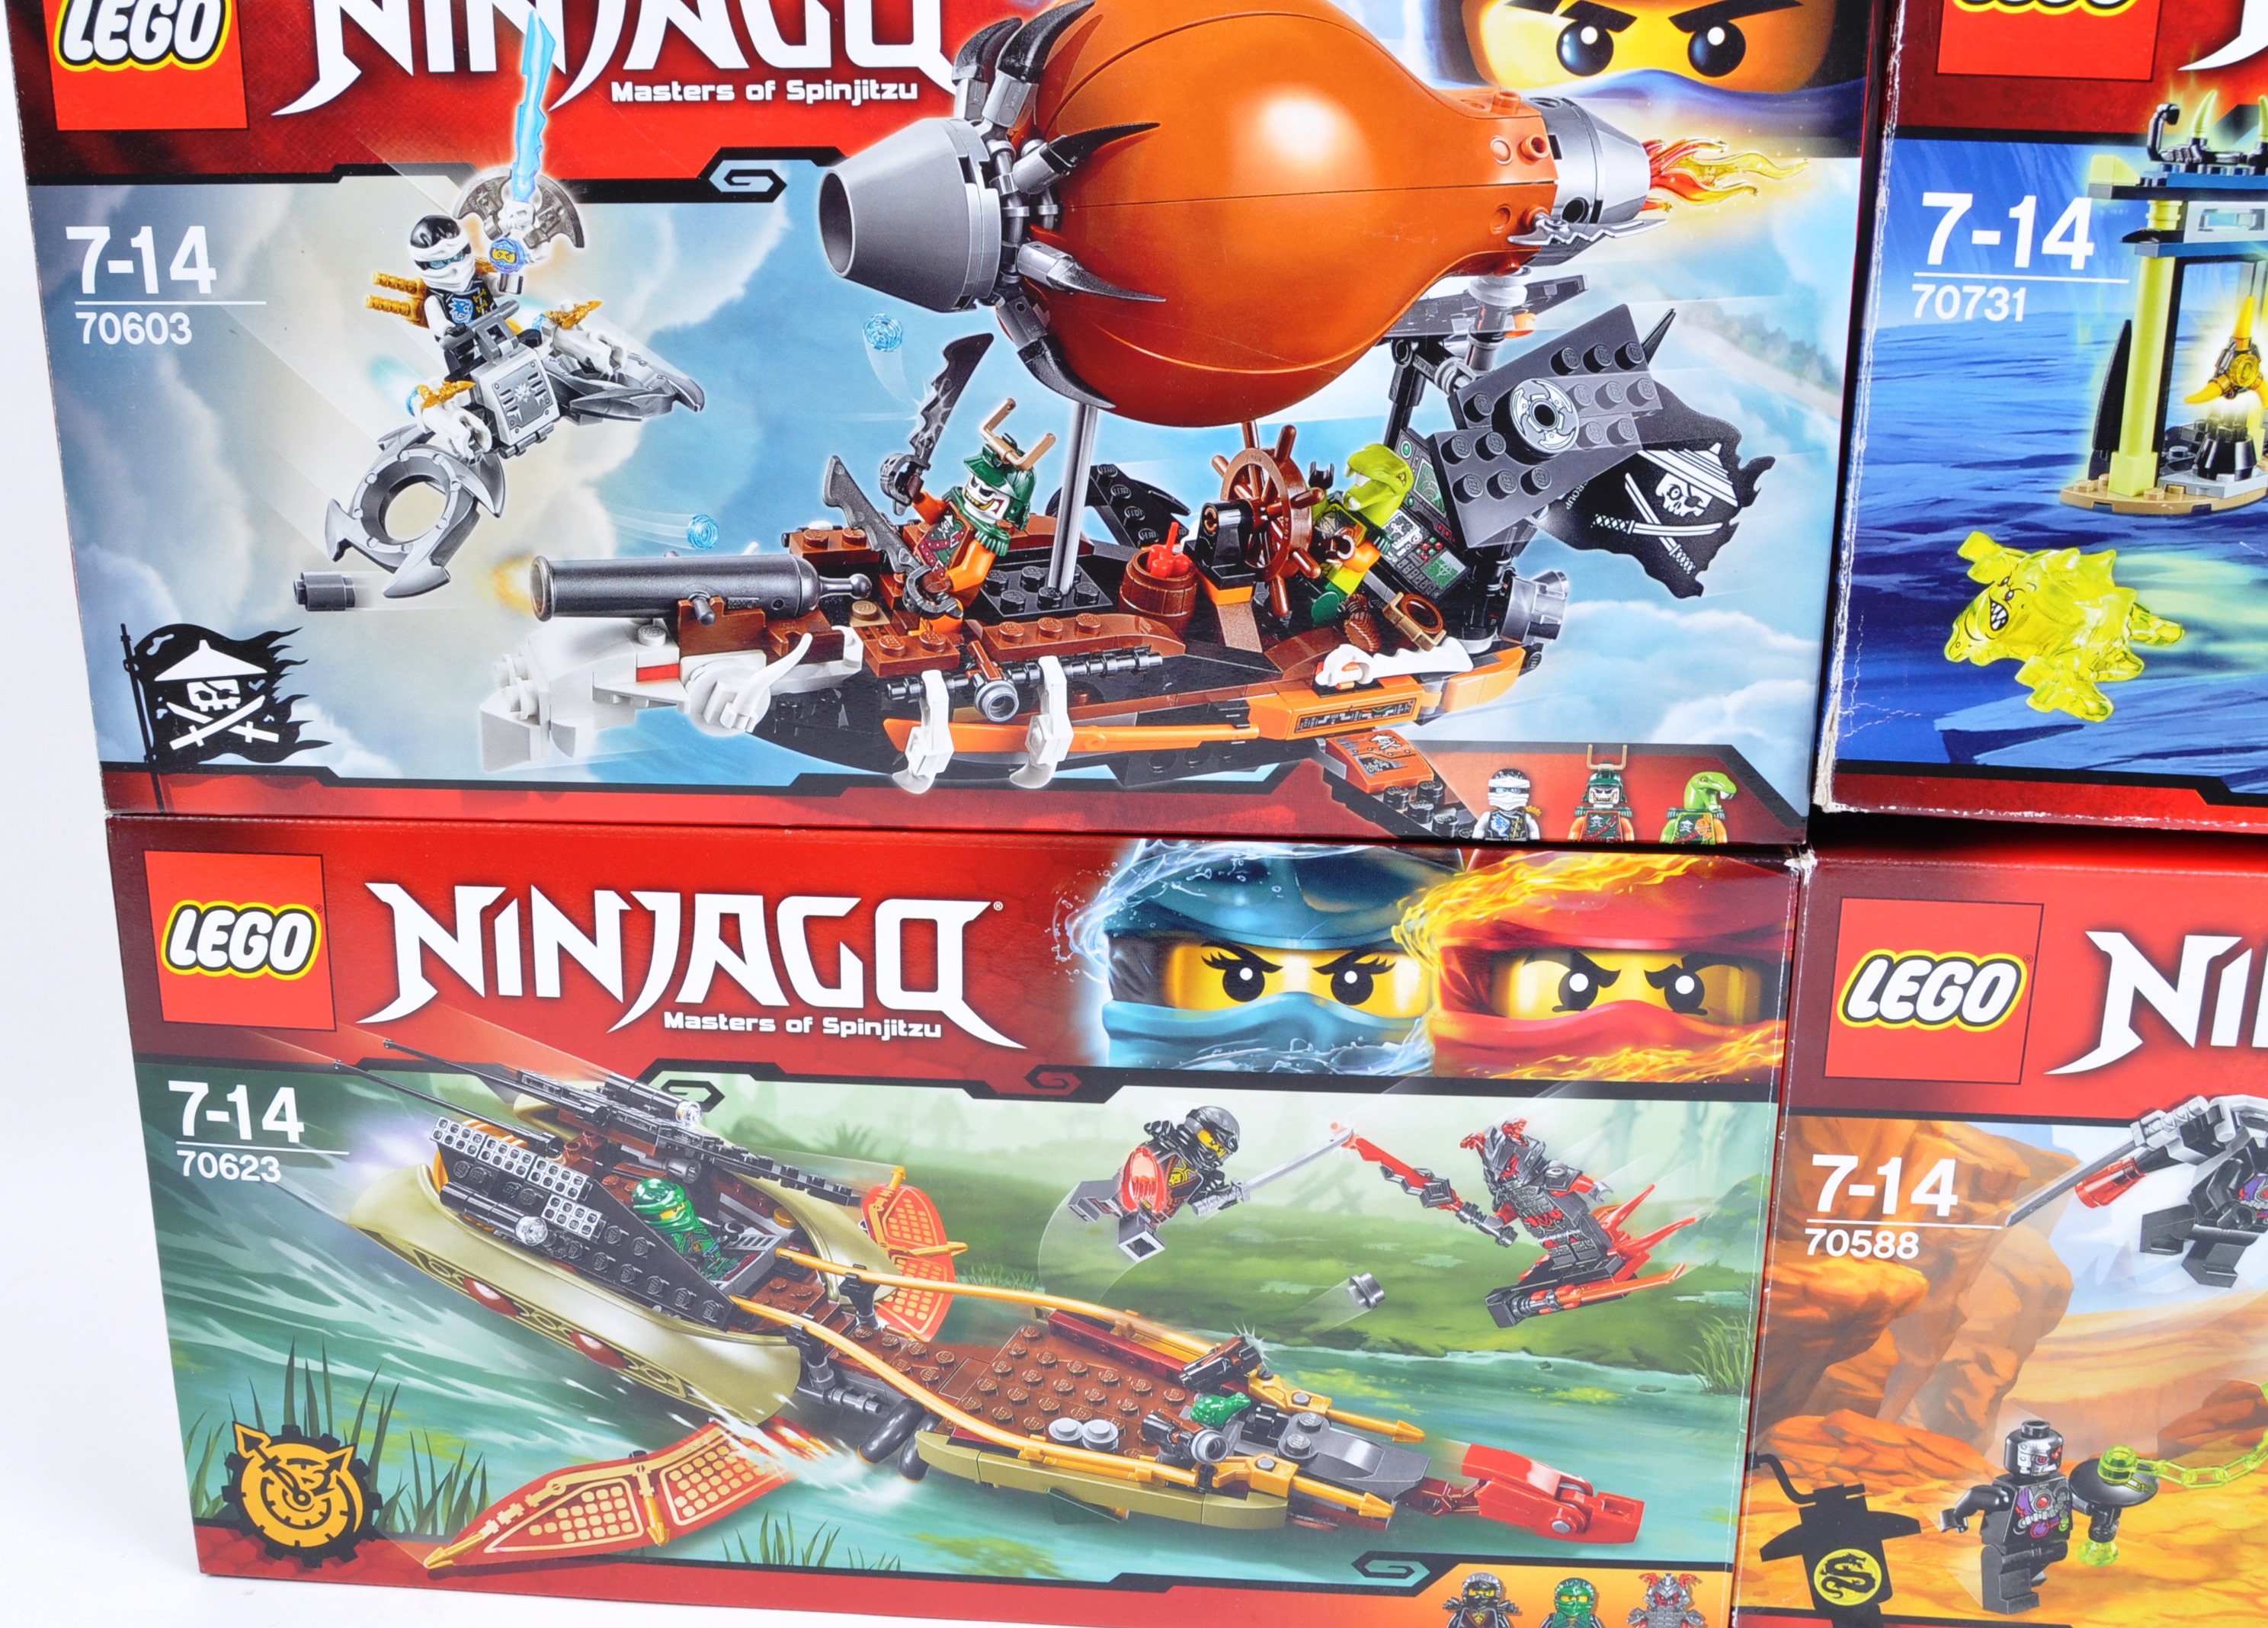 LEGO SETS - NINJAGO MASTERS OF SPINJITZU - Image 2 of 5